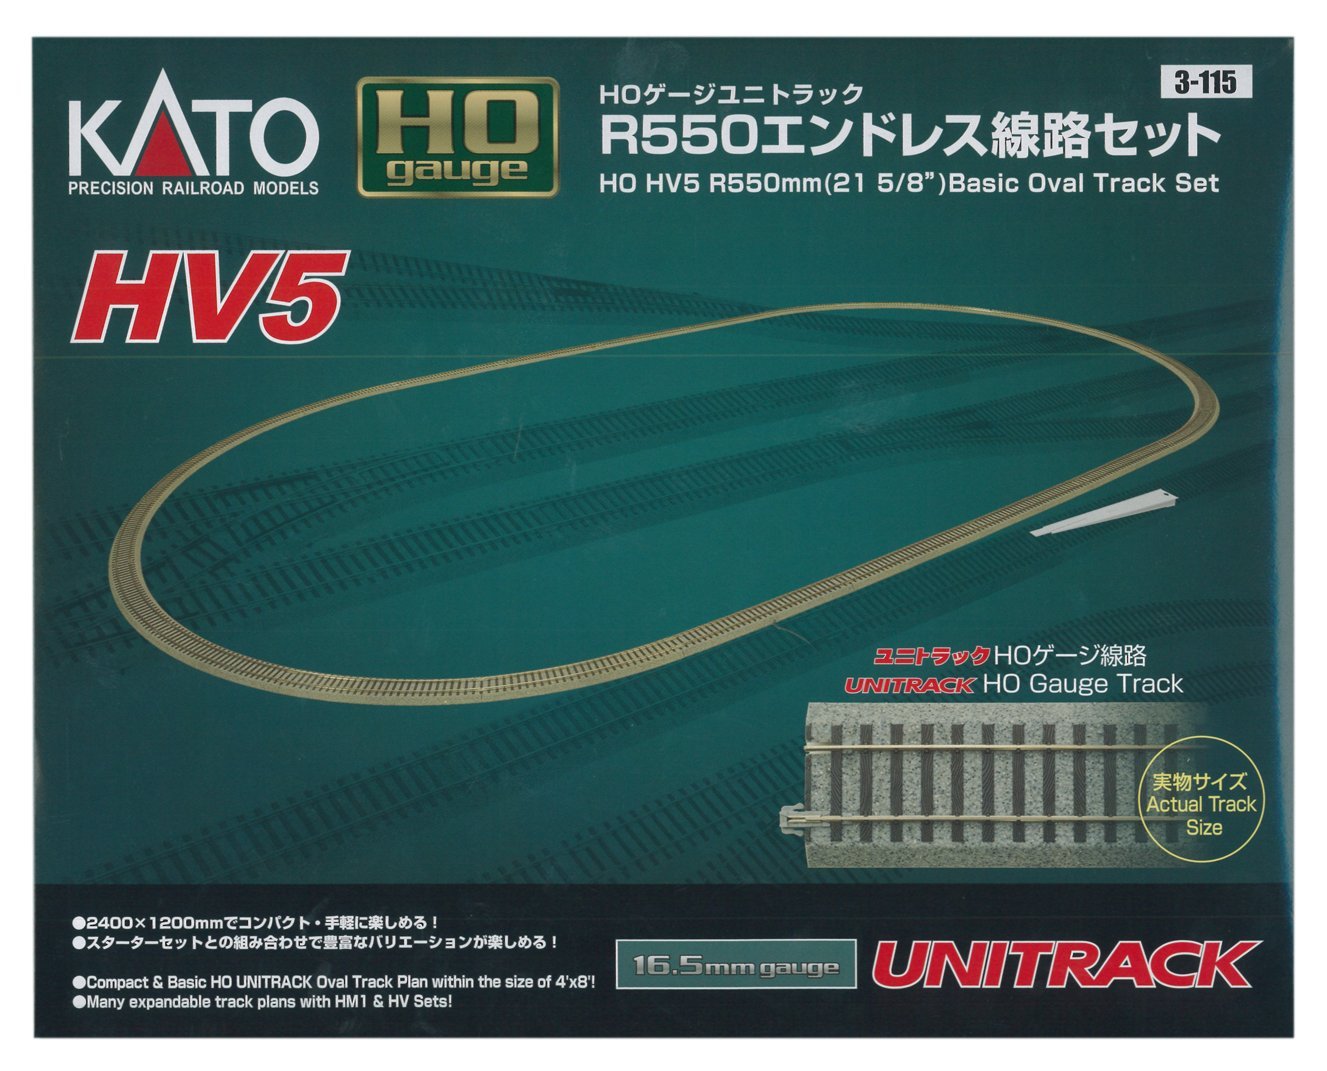 3-115 Unitrack HV5 R550mm 821 5/8`` Basic Oval Track Set